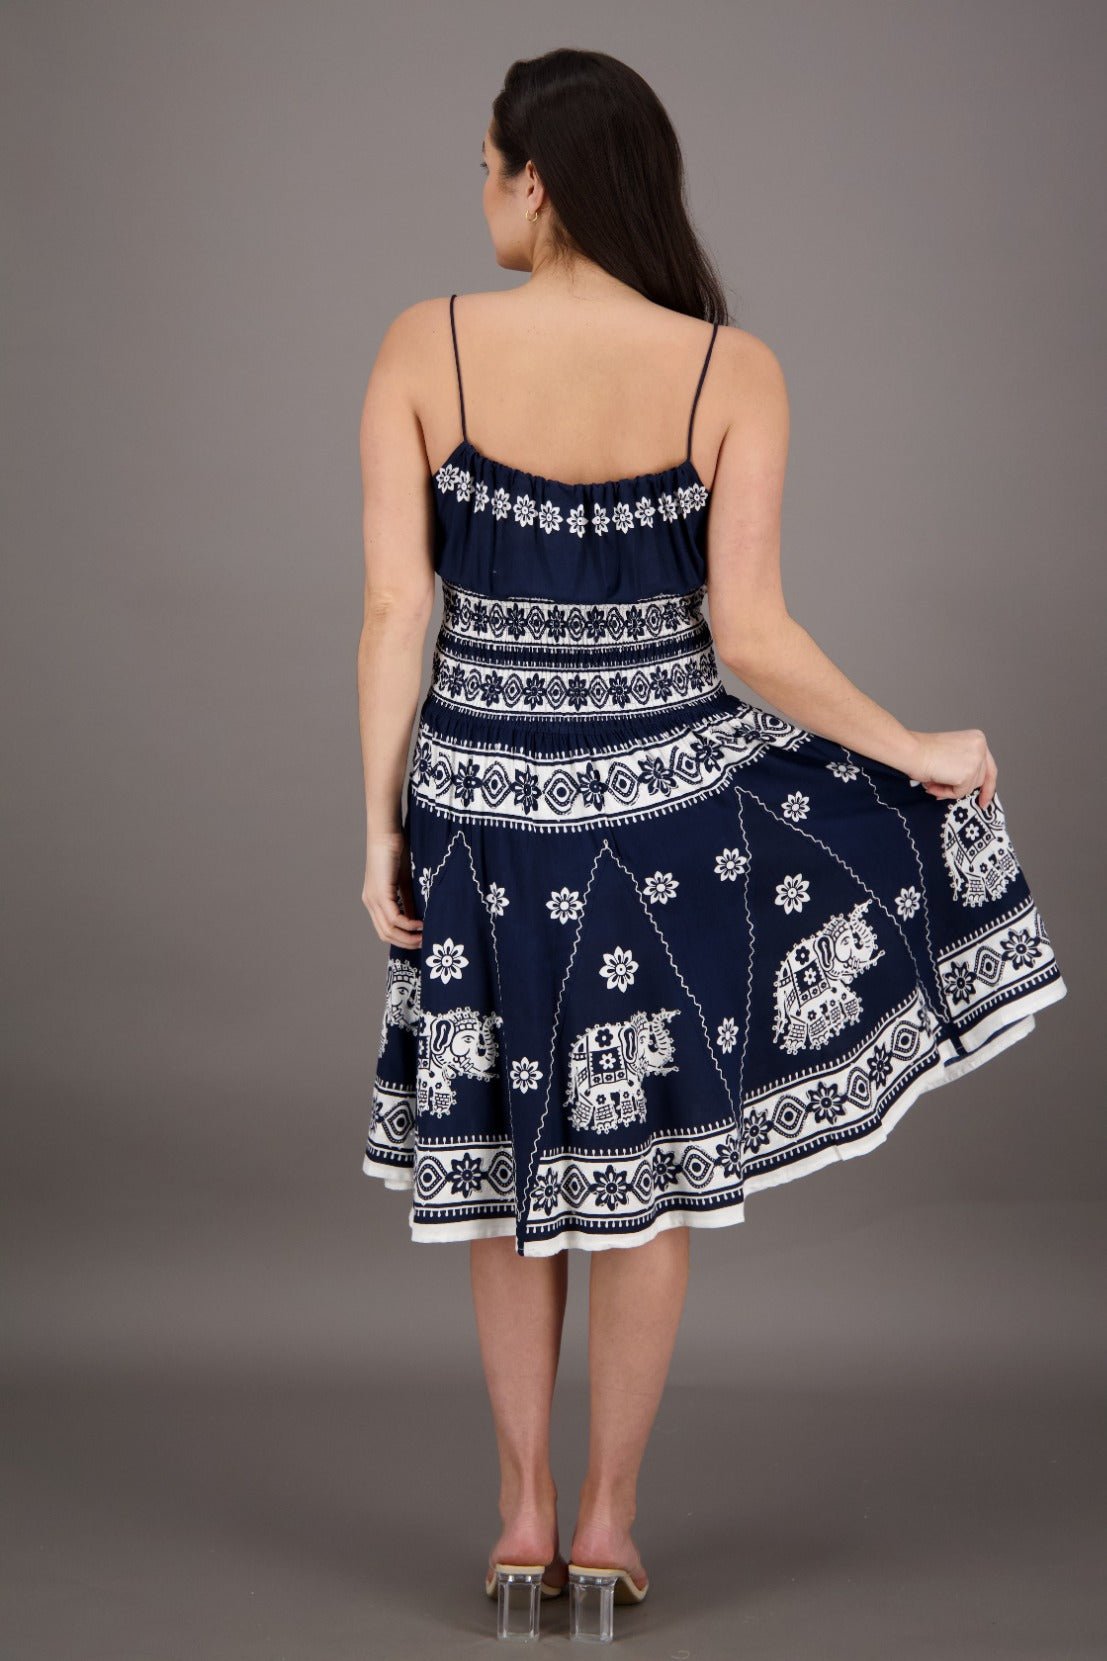 Elephant Block Print Batik Dress 2833 - Advance Apparels Inc